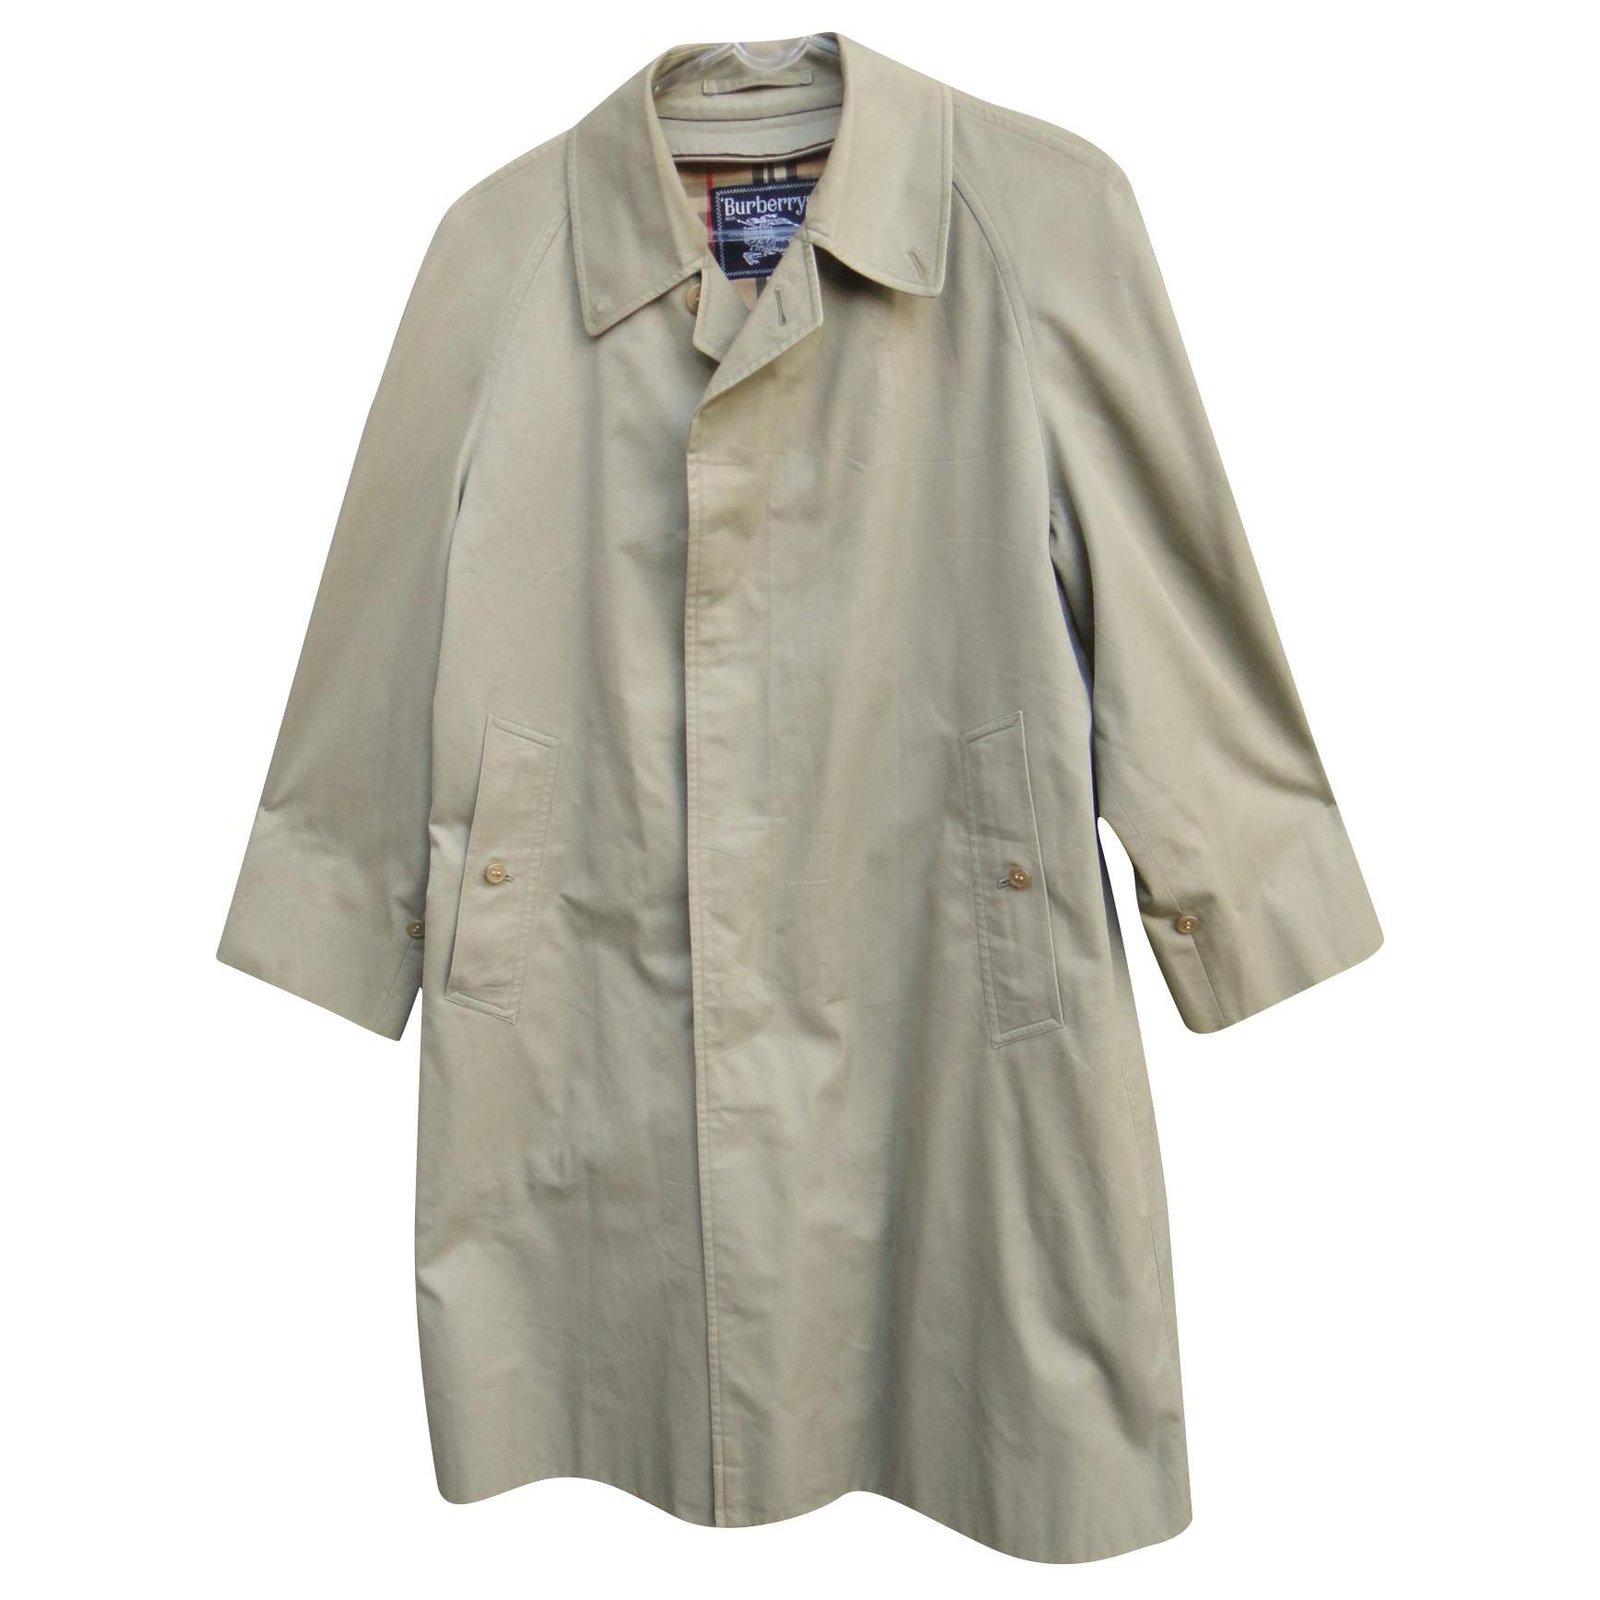 Burberry men's raincoat vintage sixties size XS